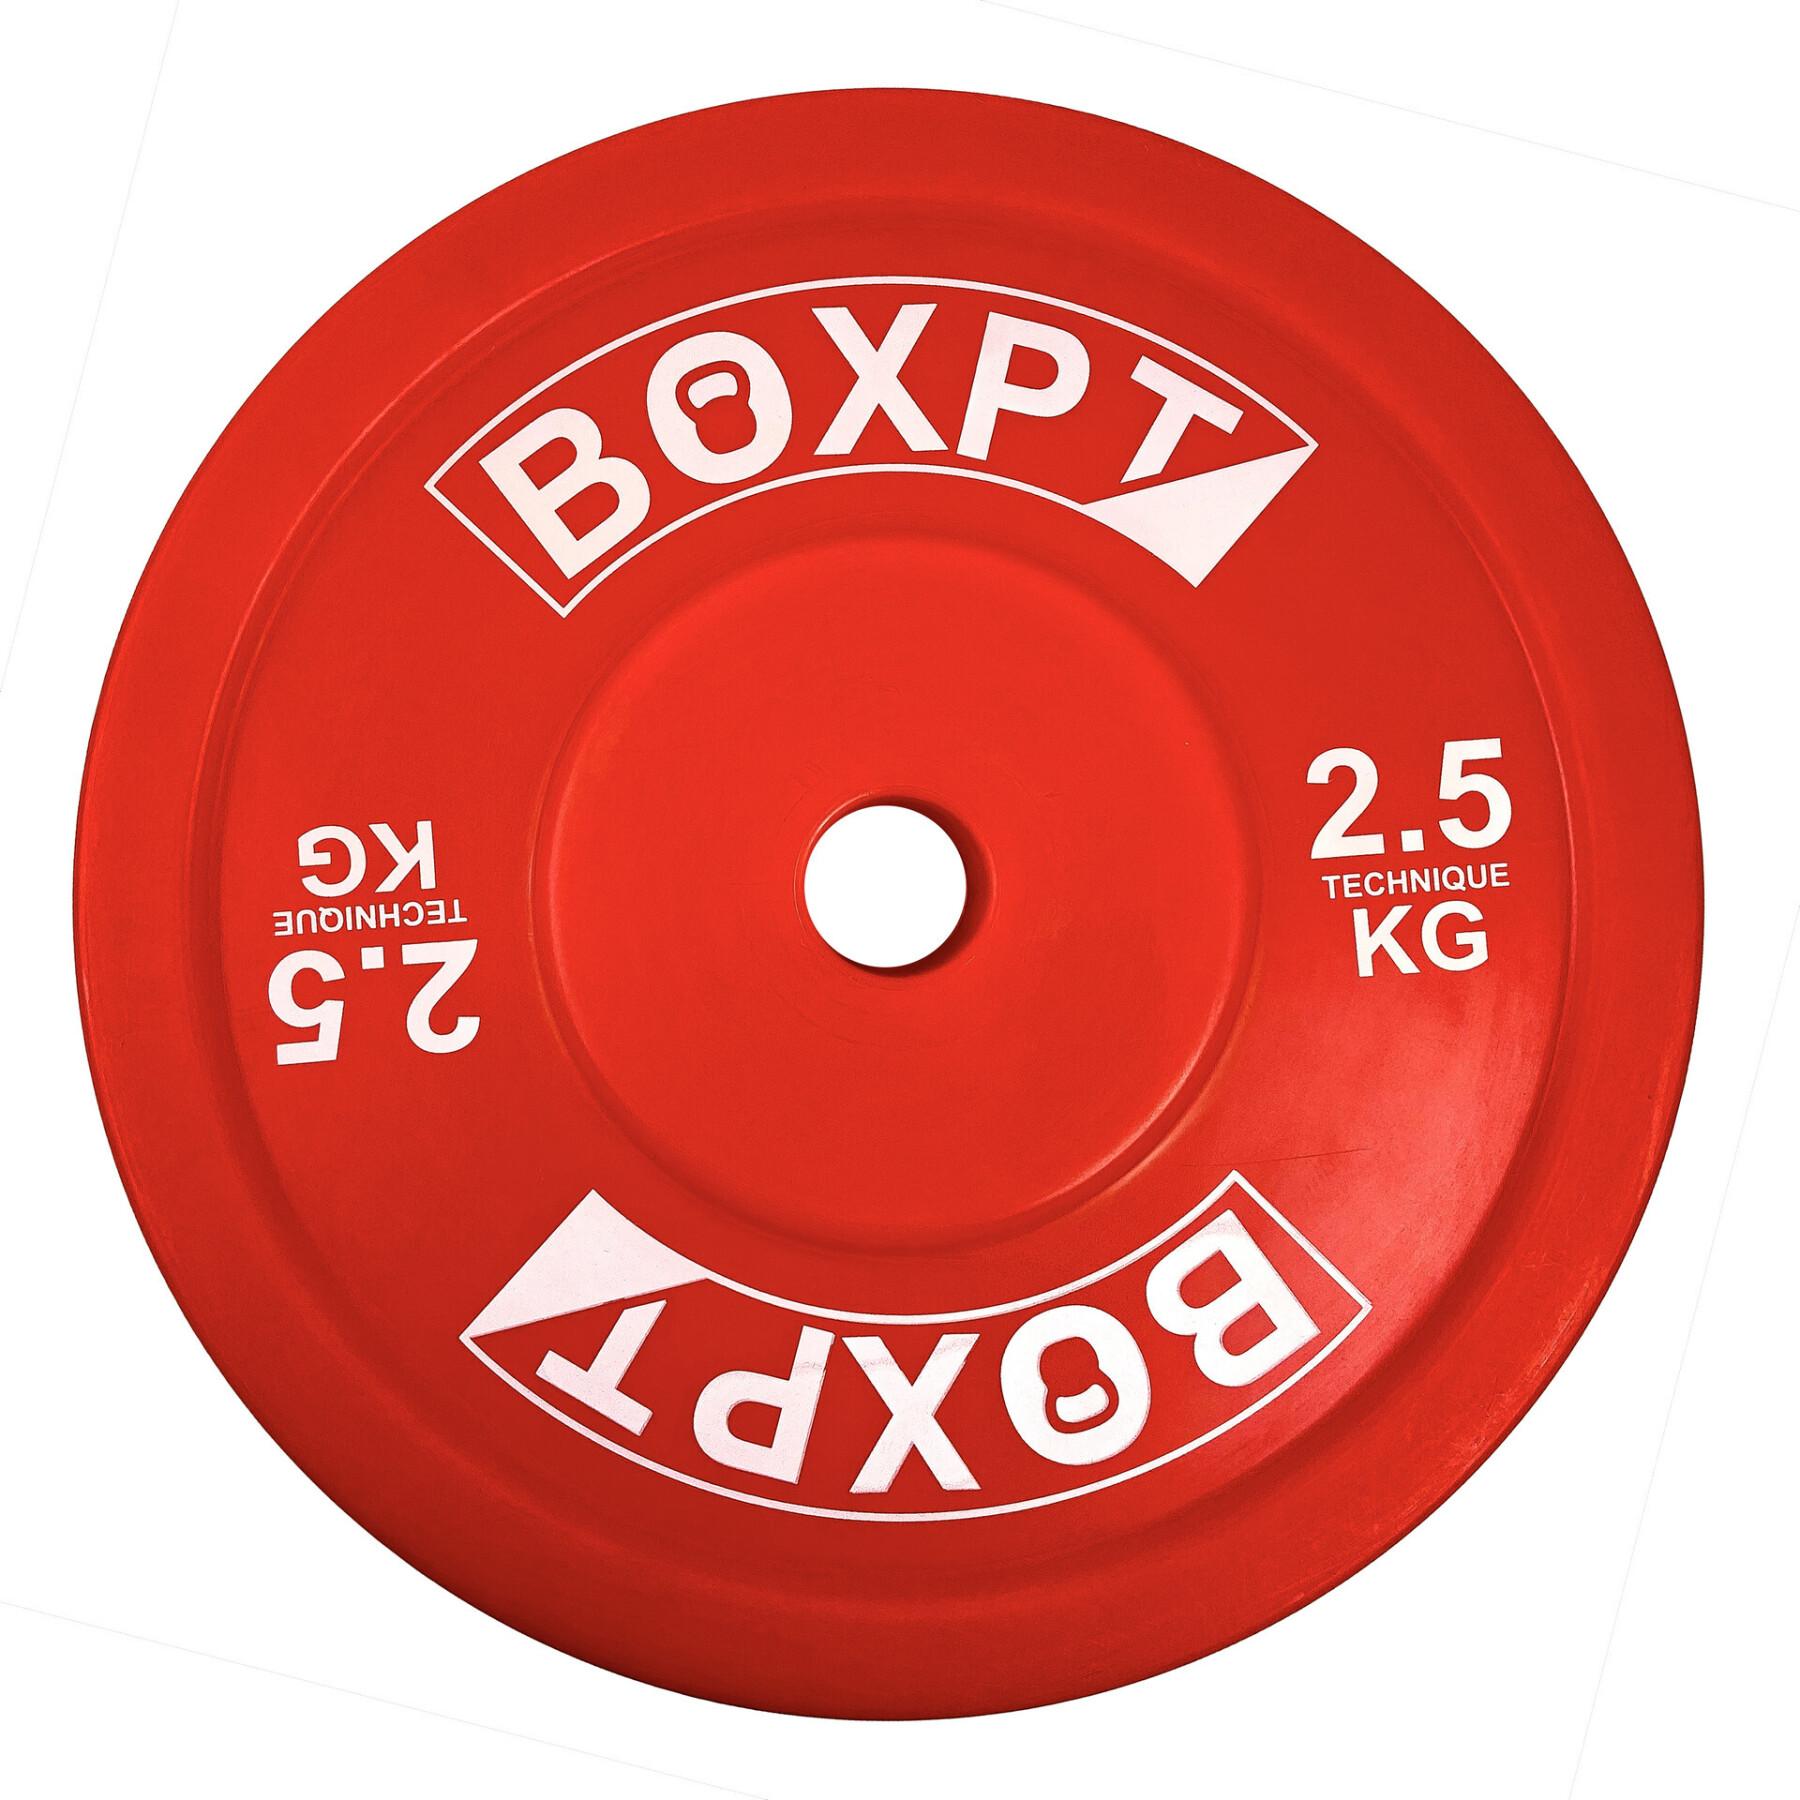 Gewichtsscheibe Boxpt Technique - 2,5 kg